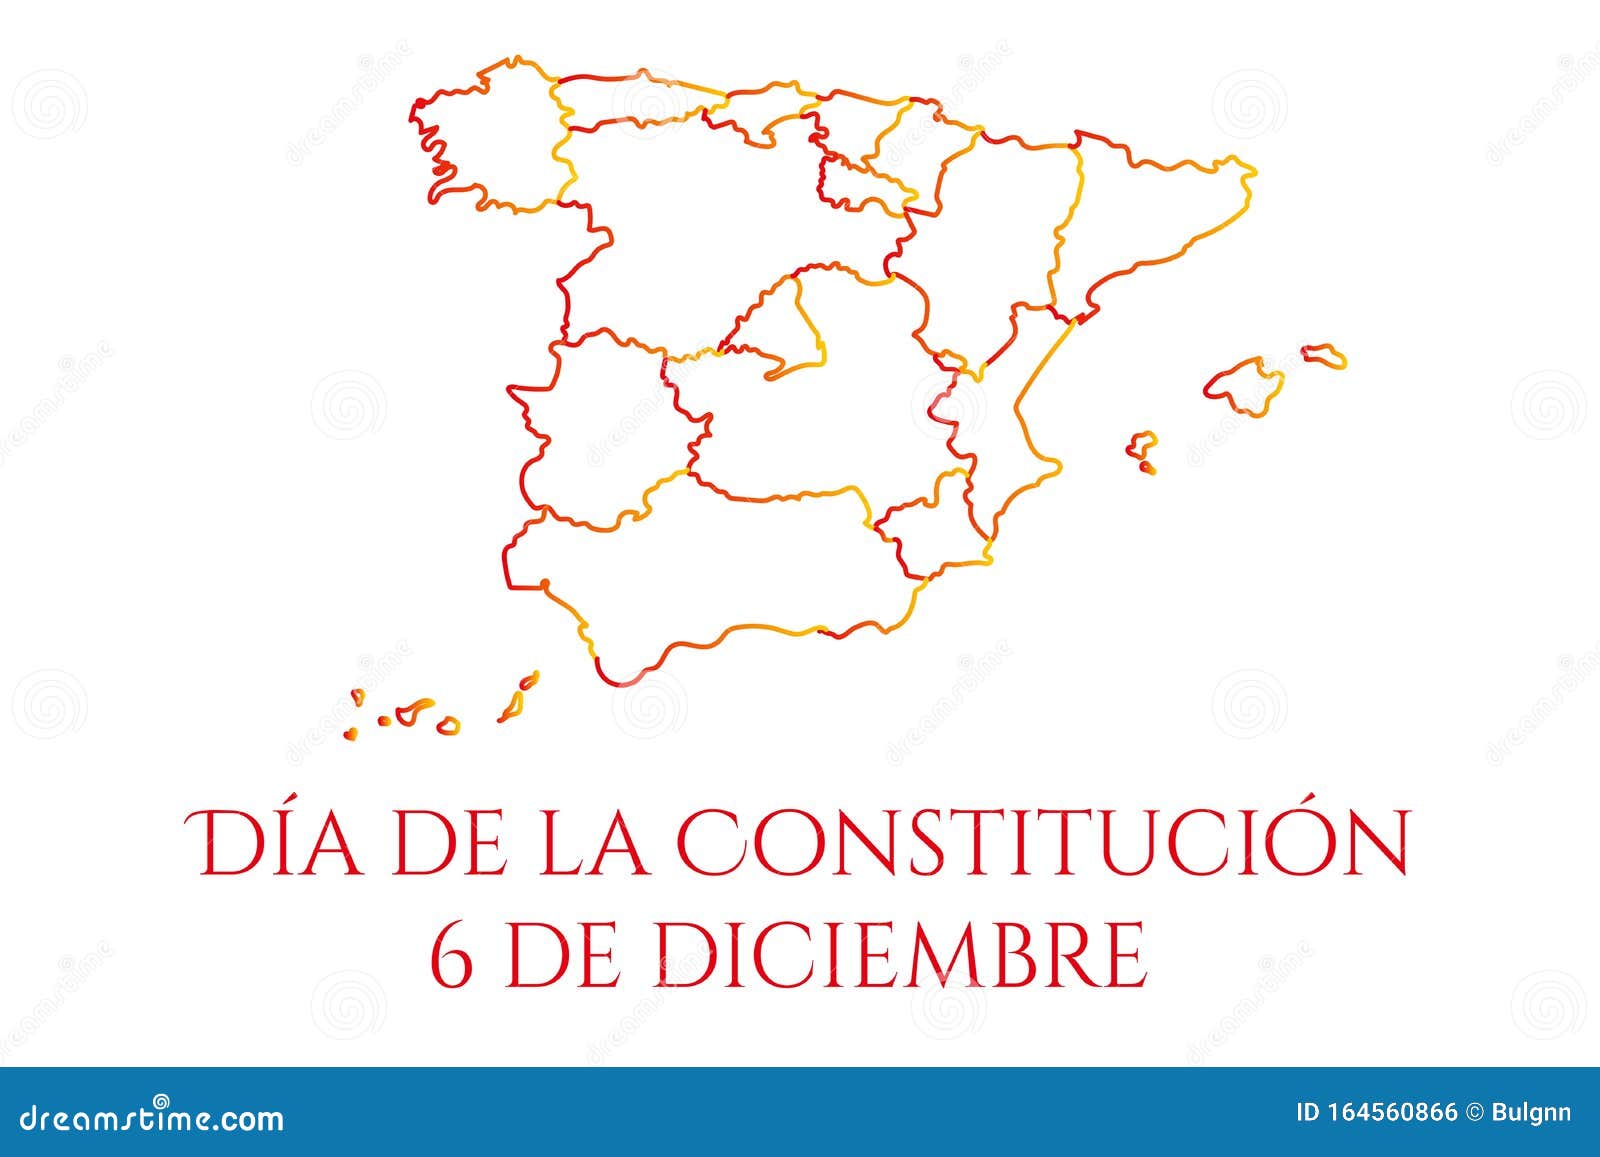 Concept of Constitution Day in Spain or Día de la Constitución Española in  Spanish. Template for background, banner, card, poster with text  inscription. 6 December Stock Vector